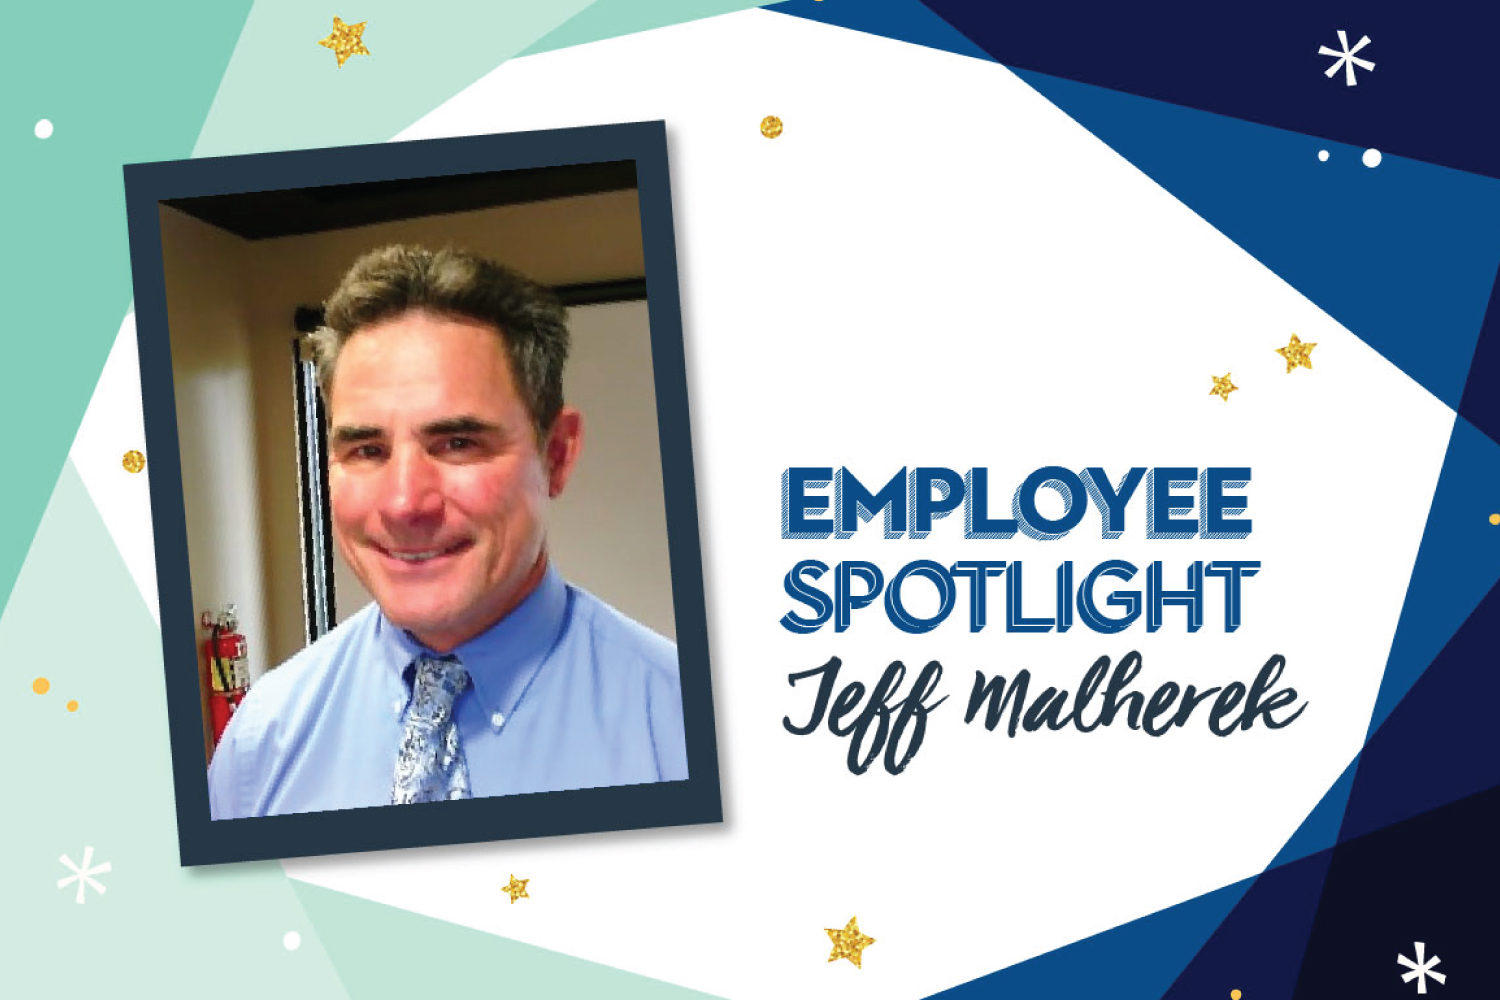 Employee Spotlight: Jeff Malherek